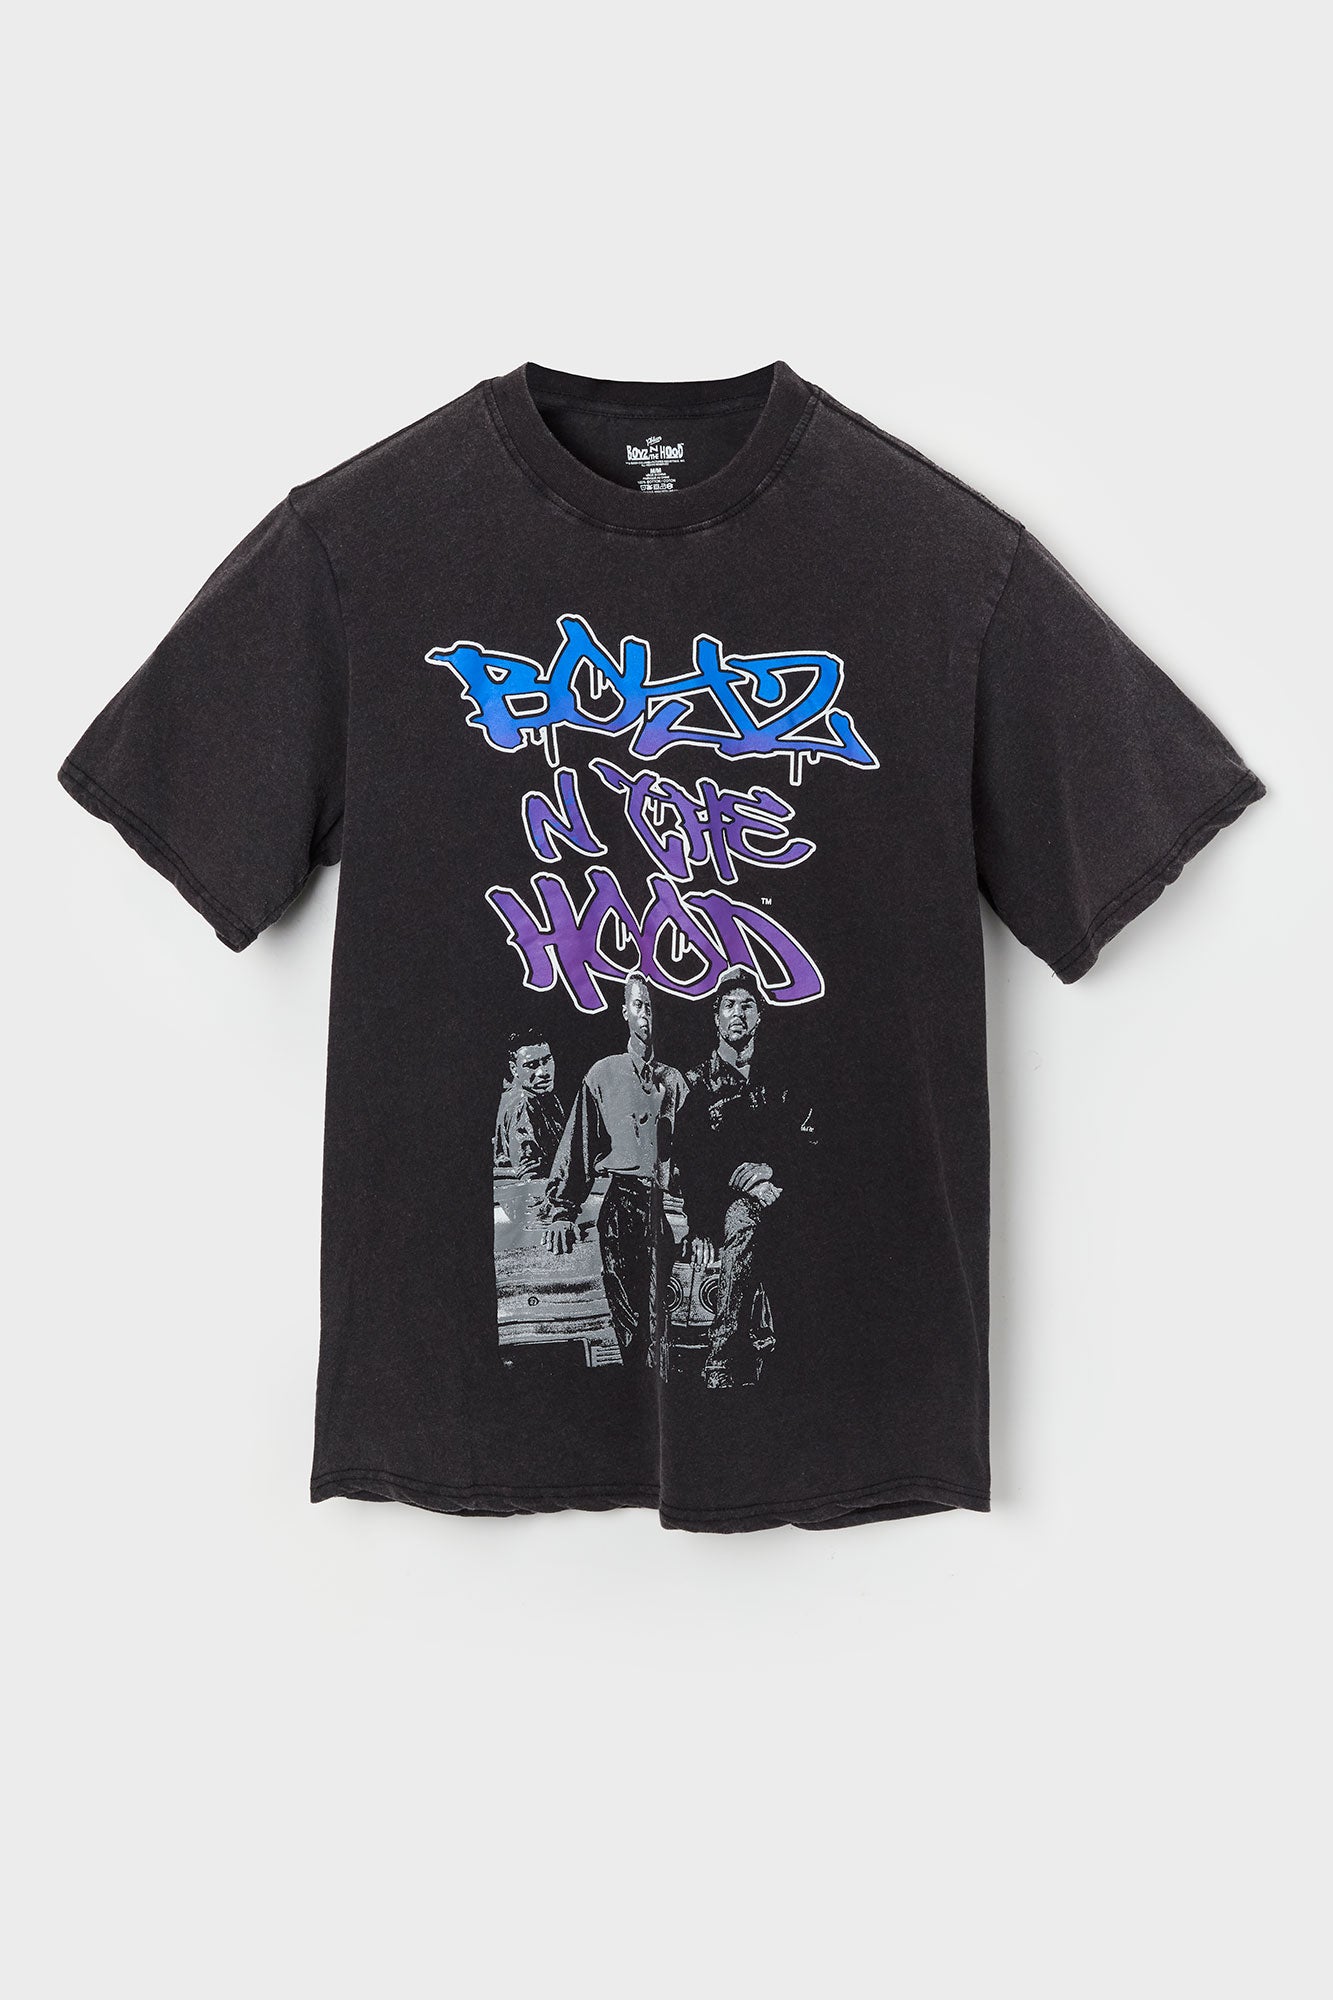 Boyz n the Hood Graphic T-Shirt